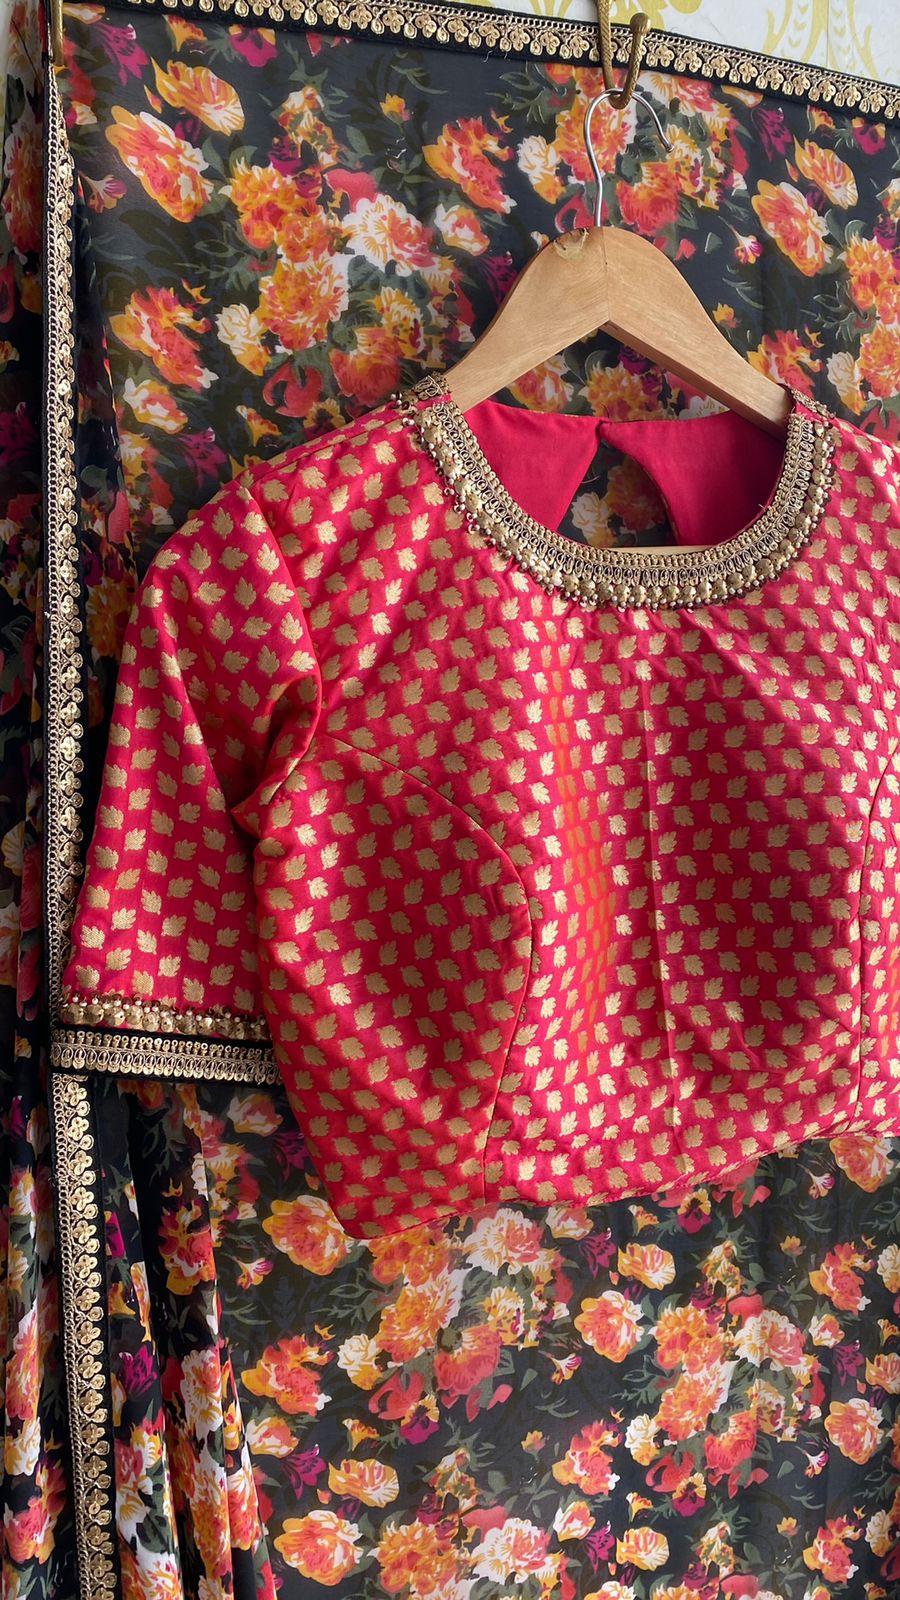 Oranga banarasi hand worked blouse - Threads